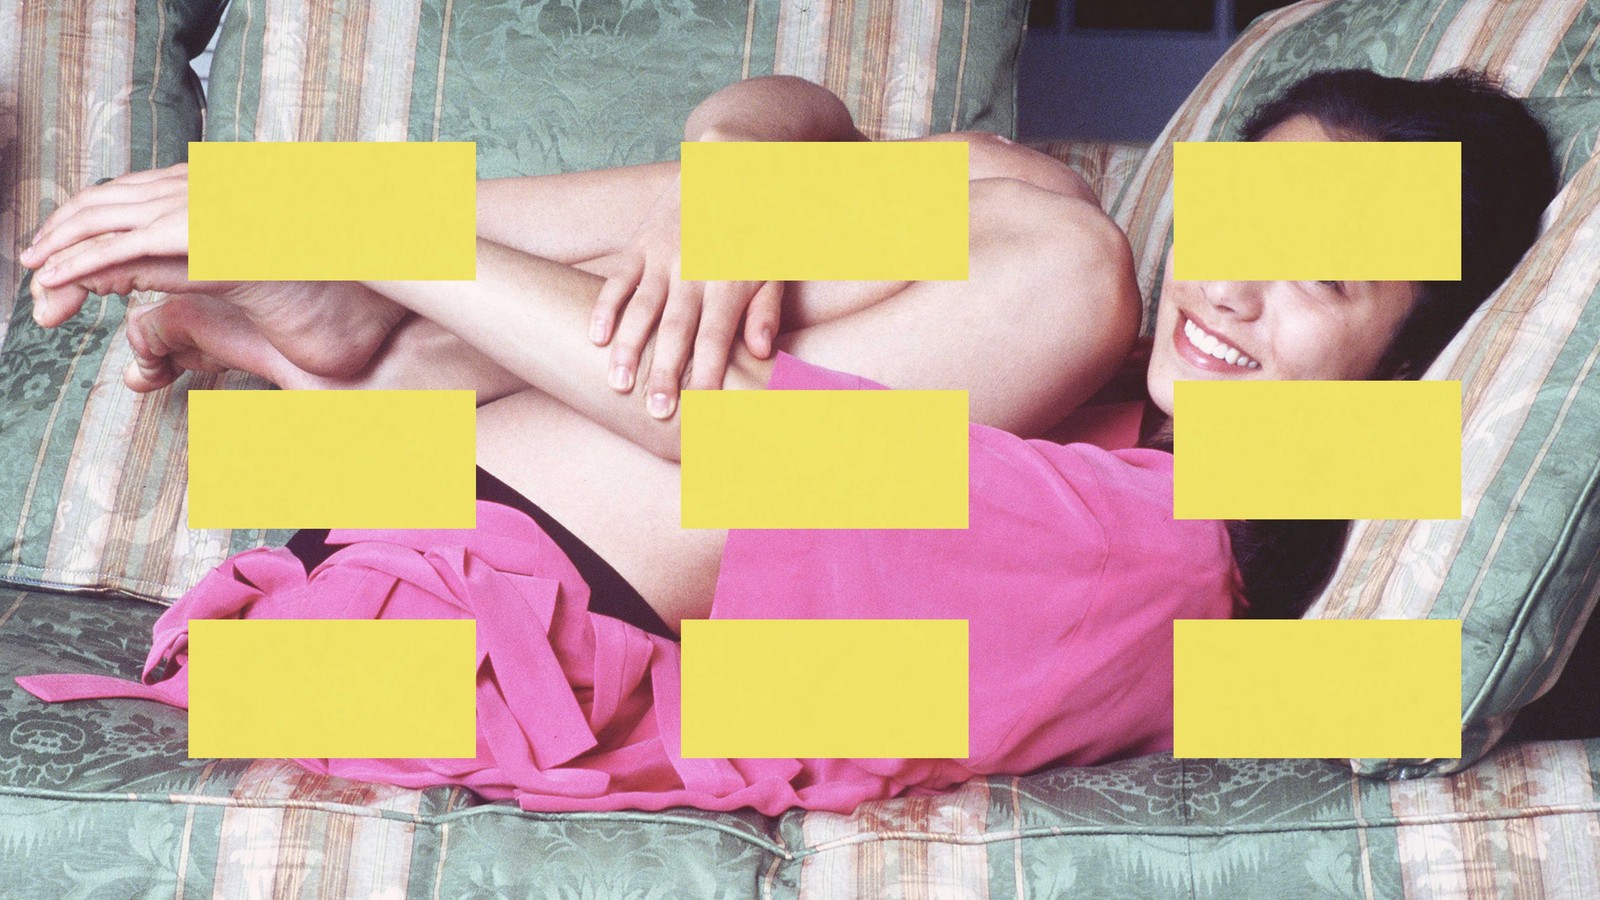 Melissa Febos's 'Girlhood' Is a Lucid ExposÃ© on Rape Culture - The Atlantic